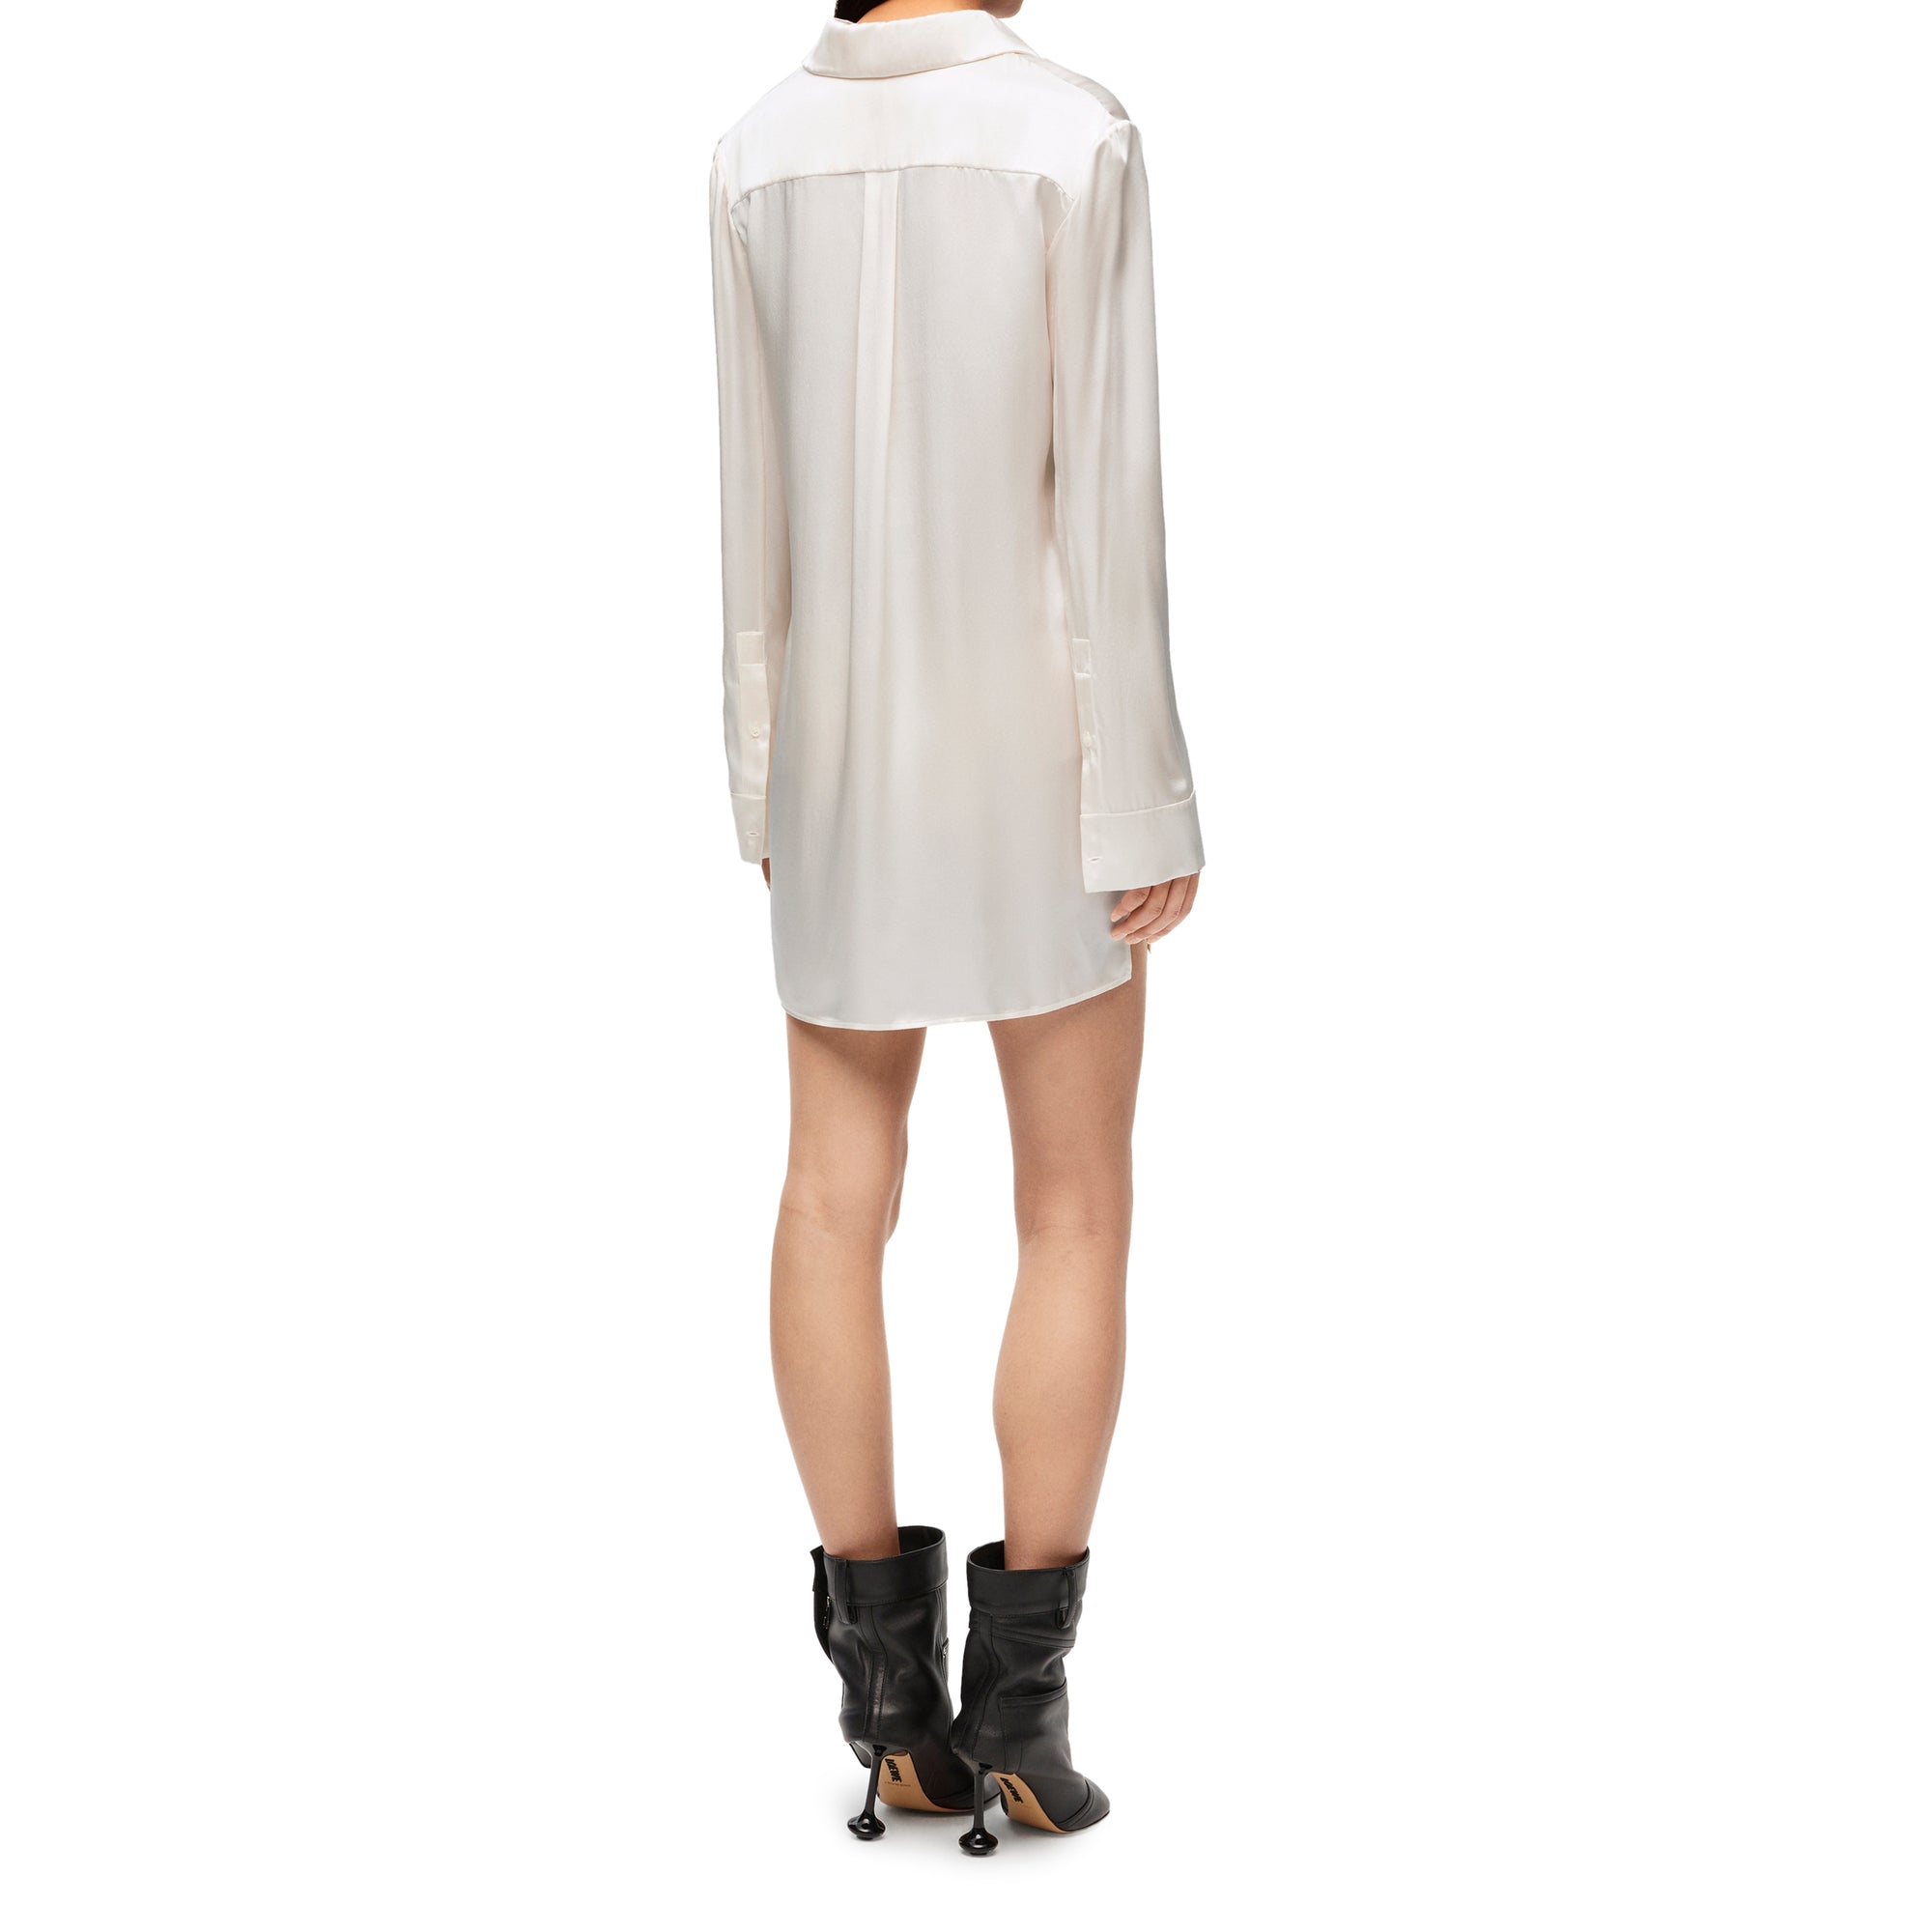 Loewe - Women’s Maruja Mallo Shirt - (White/Multicolor) view 3